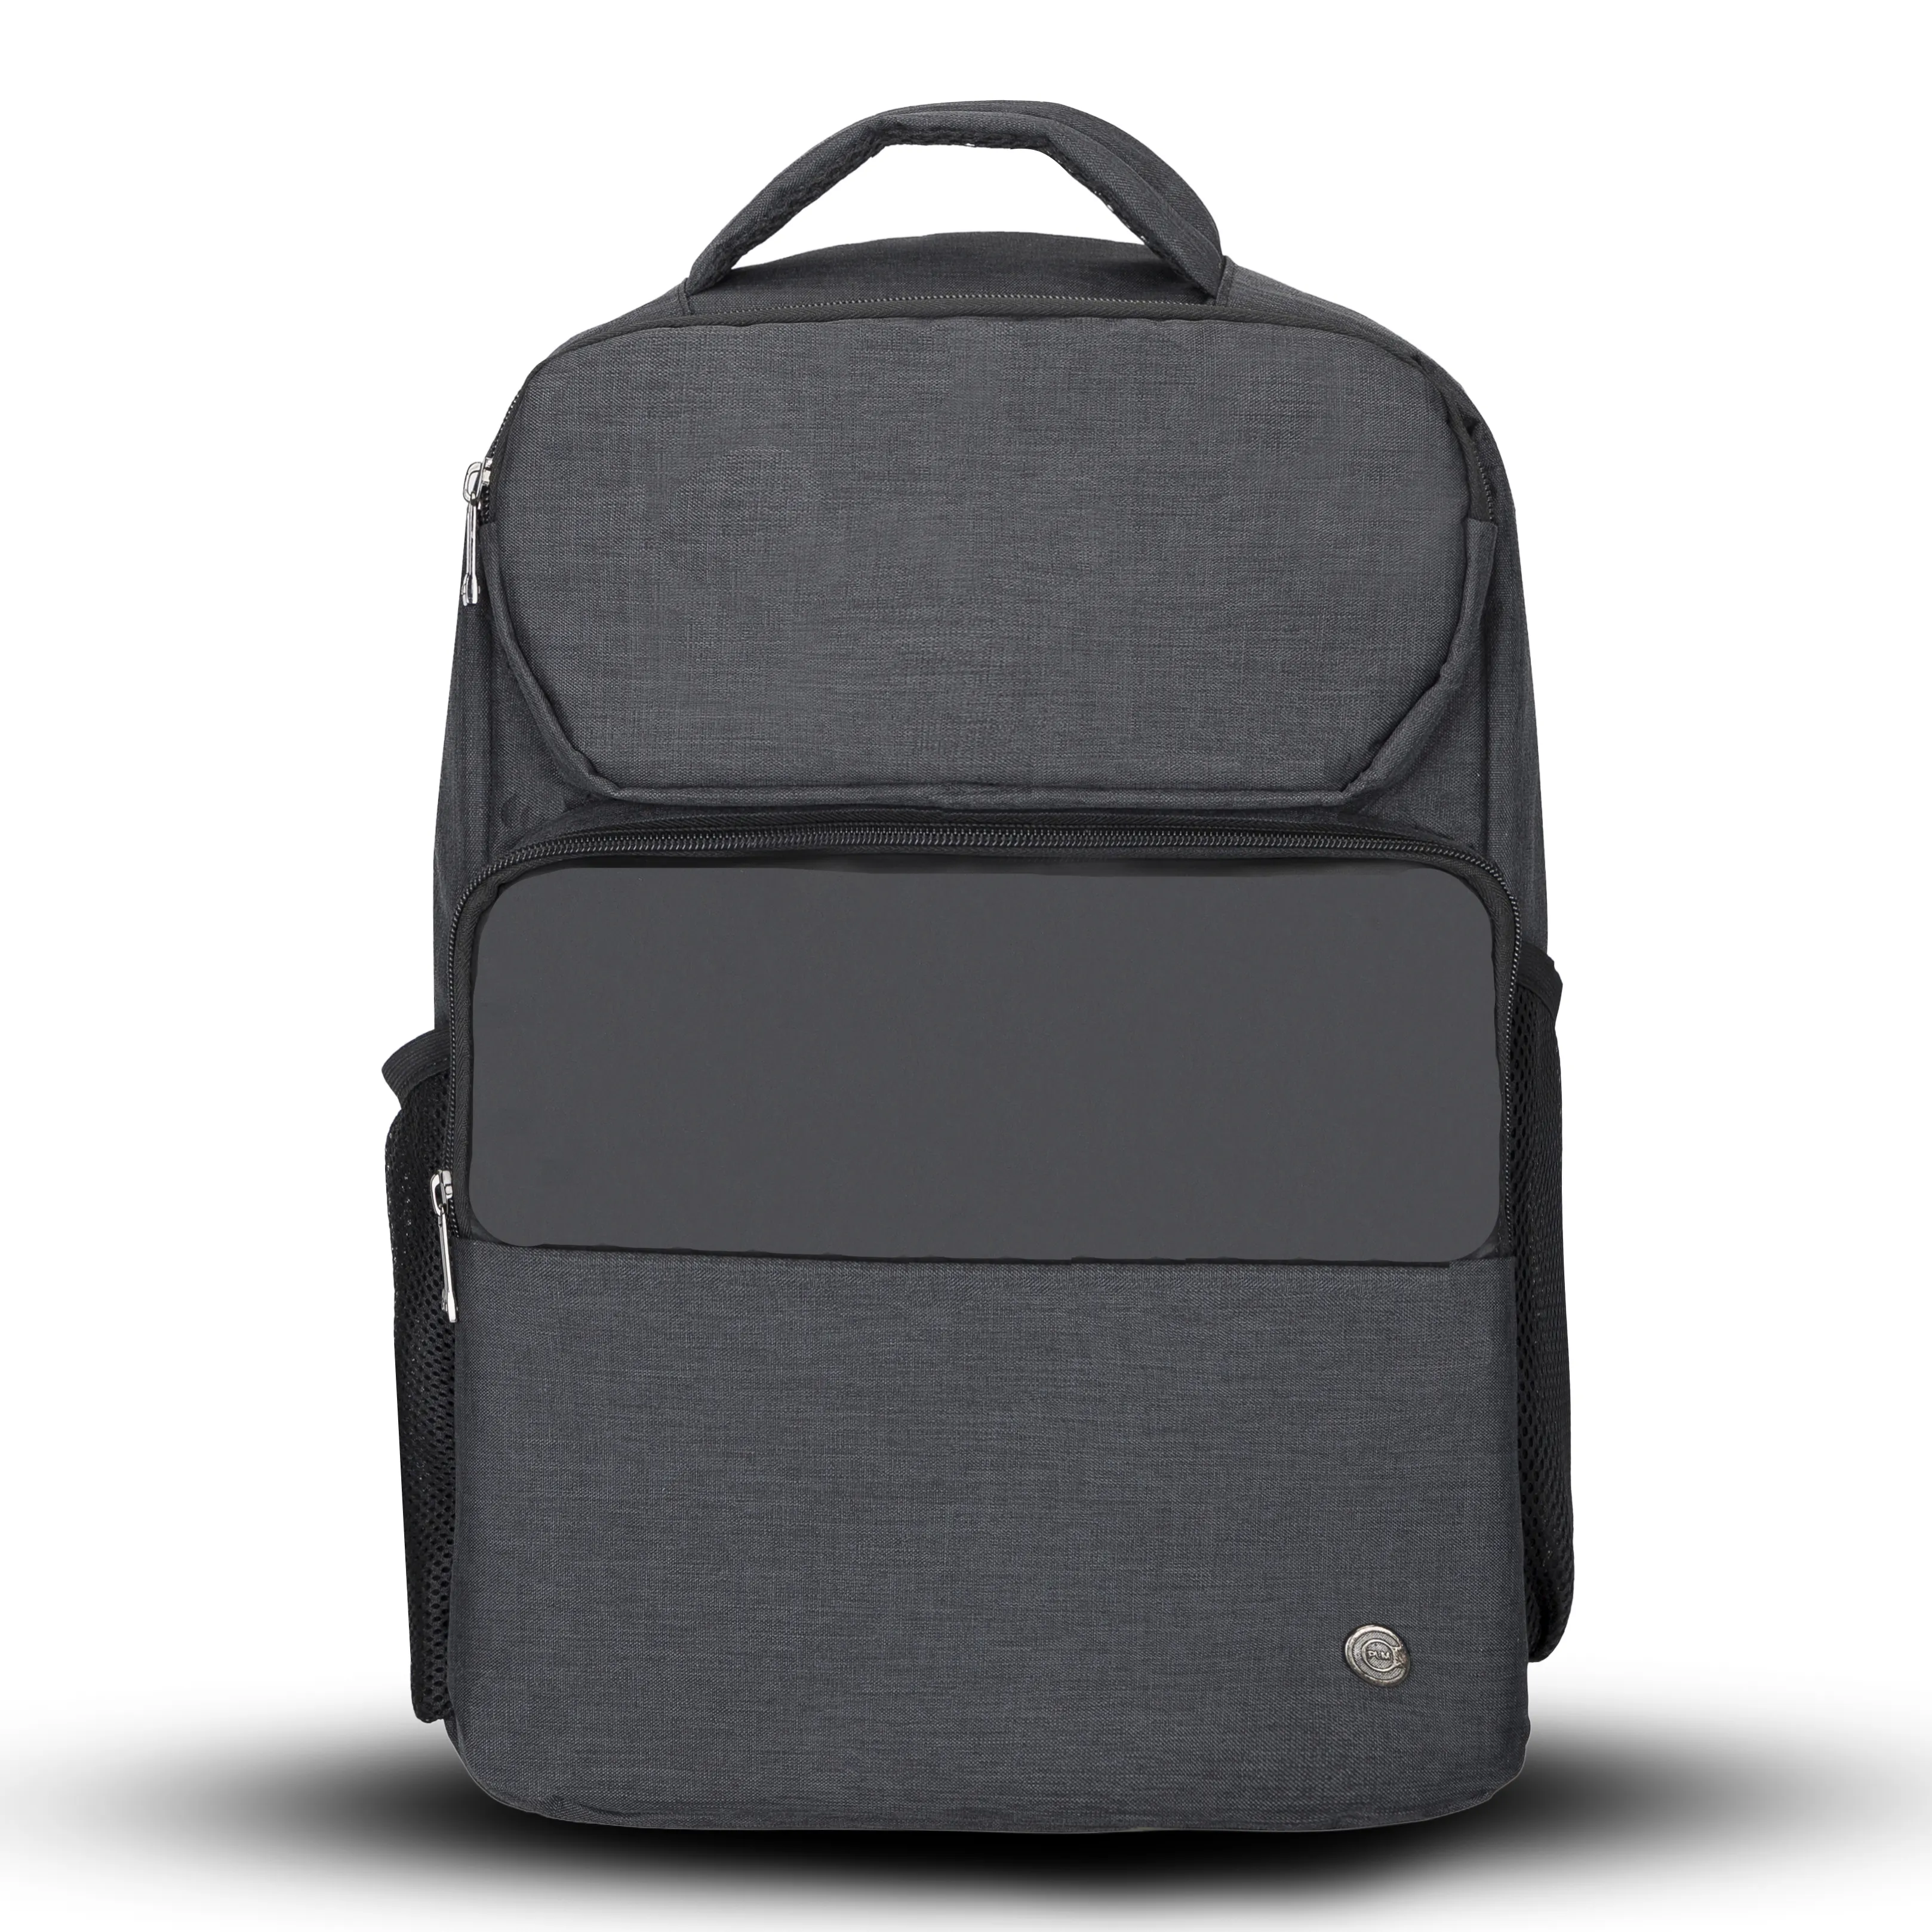 2021 PLM Plm Octagon Gaming Laptop Backpack